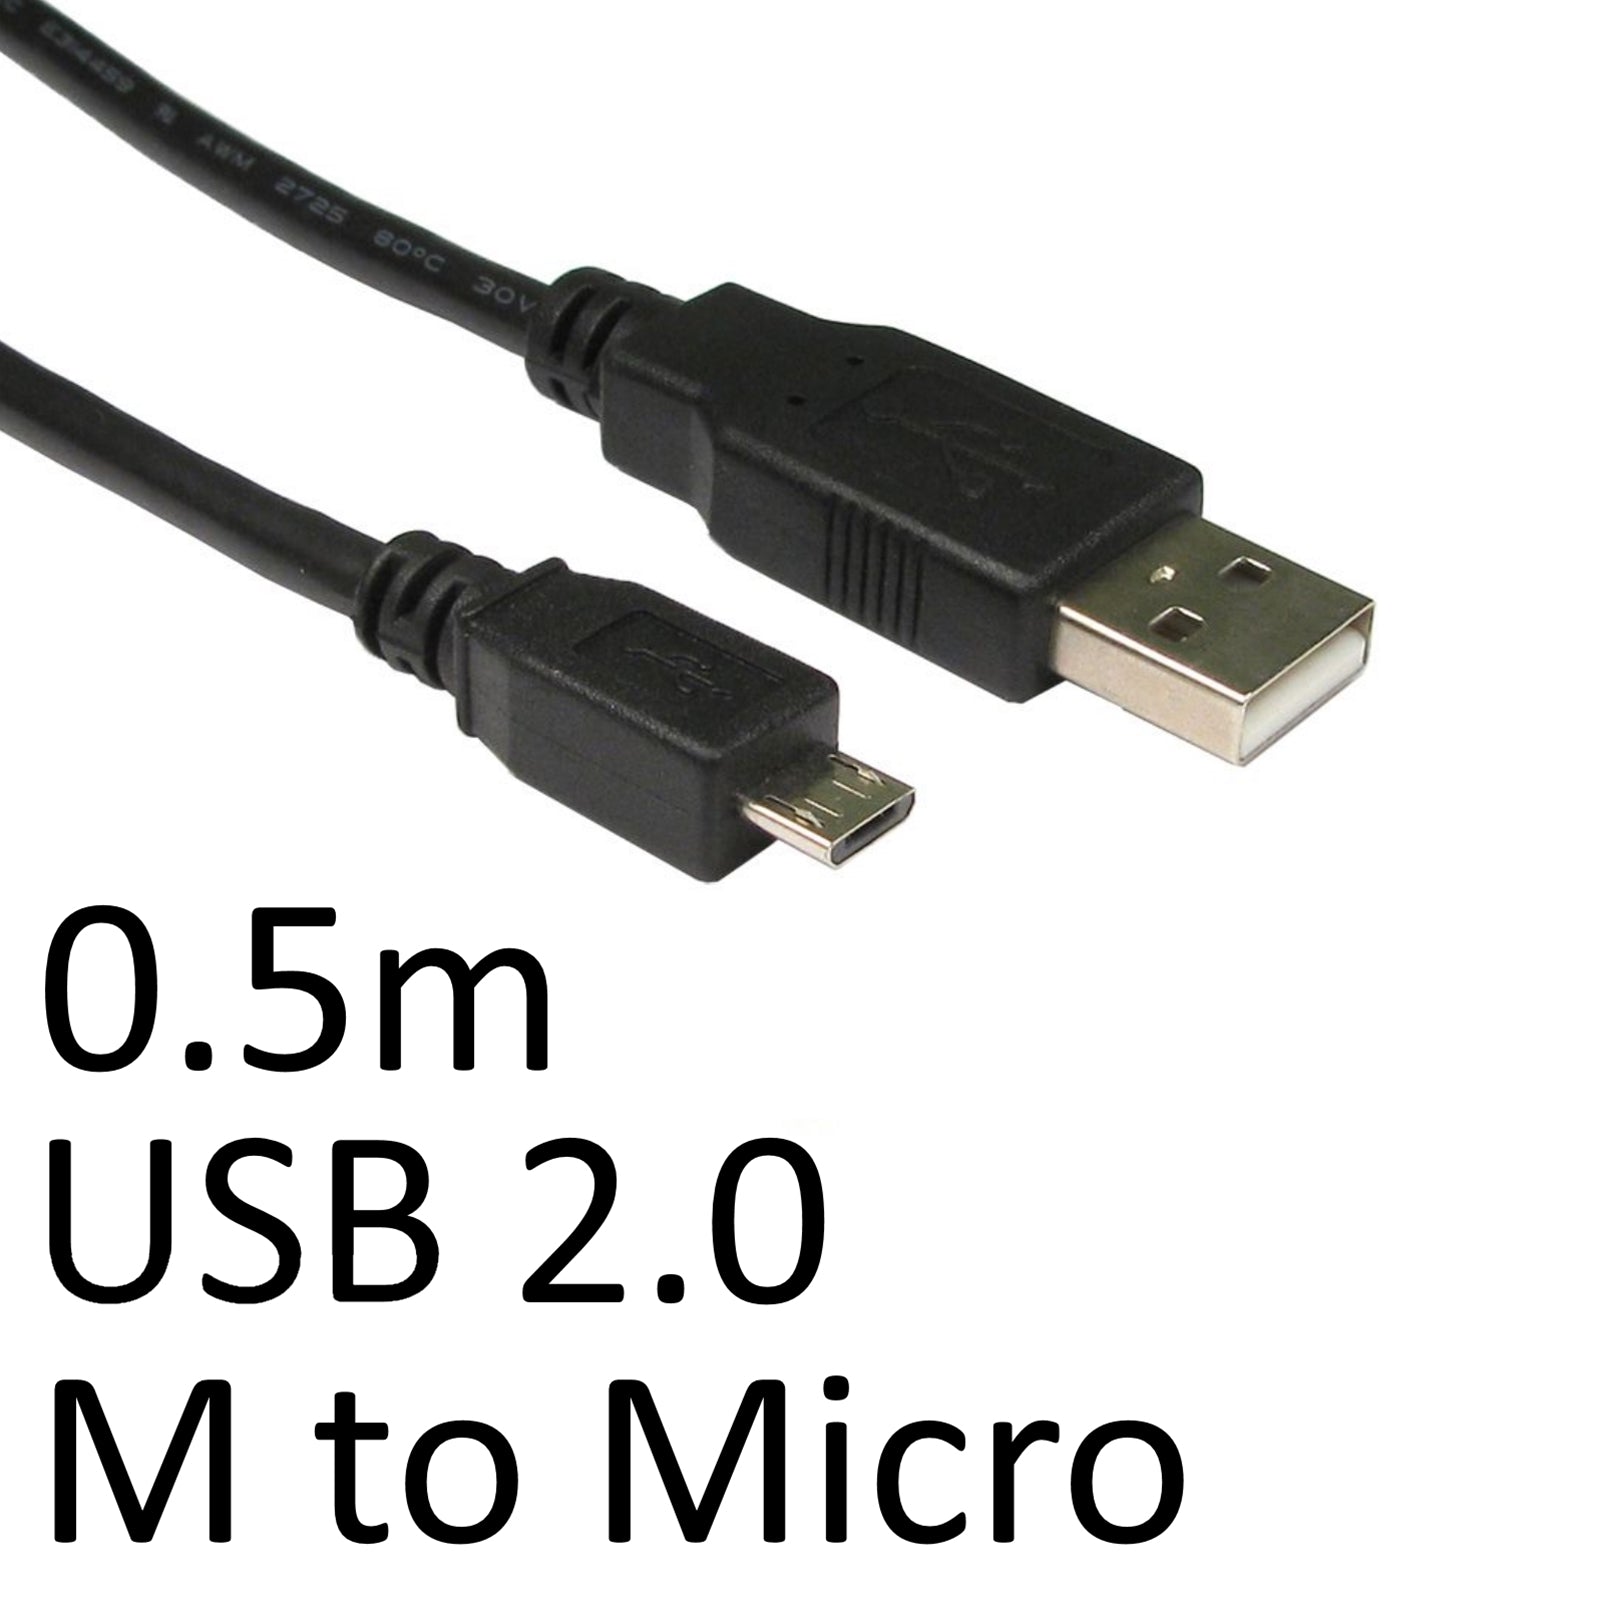 USB 2.0 A (M) to USB 2.0 Micro B (M) 0.5m OEM Data Cable - Black